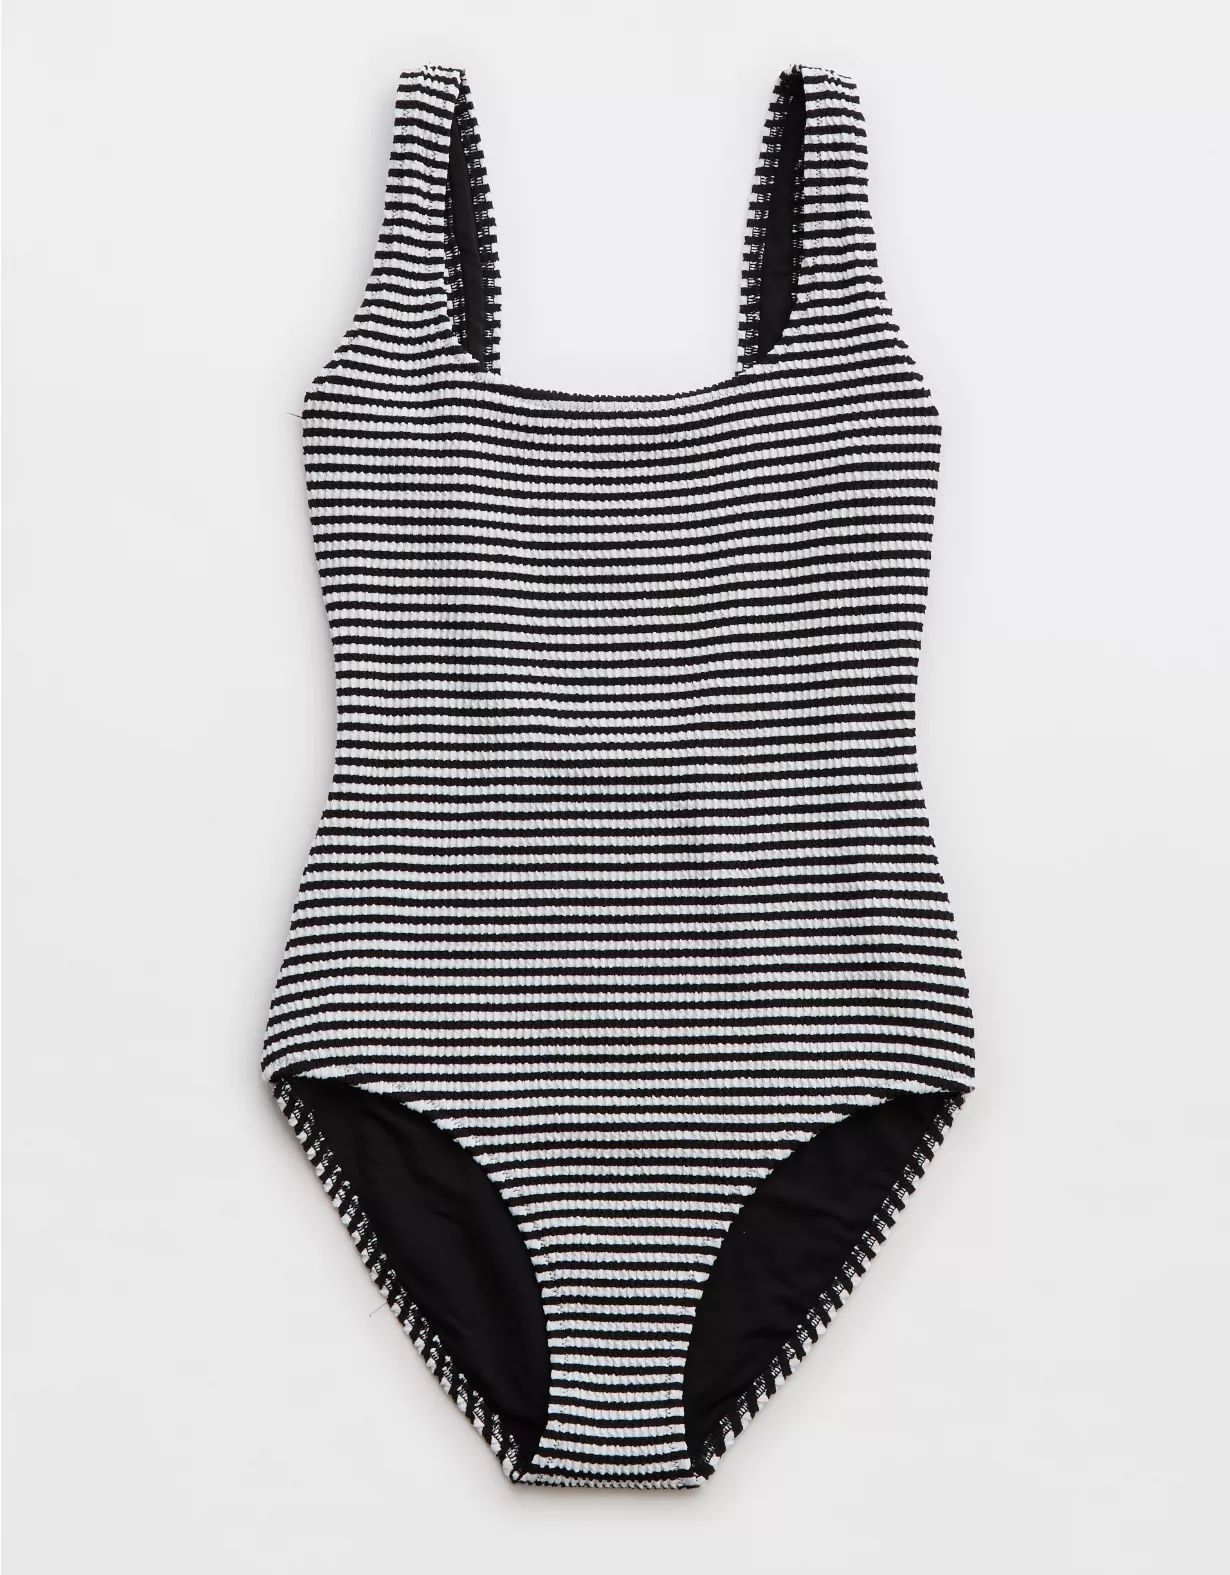 Aerie Crinkle Stripe Wide Strap Scoop One Piece Swimsuit | Aerie